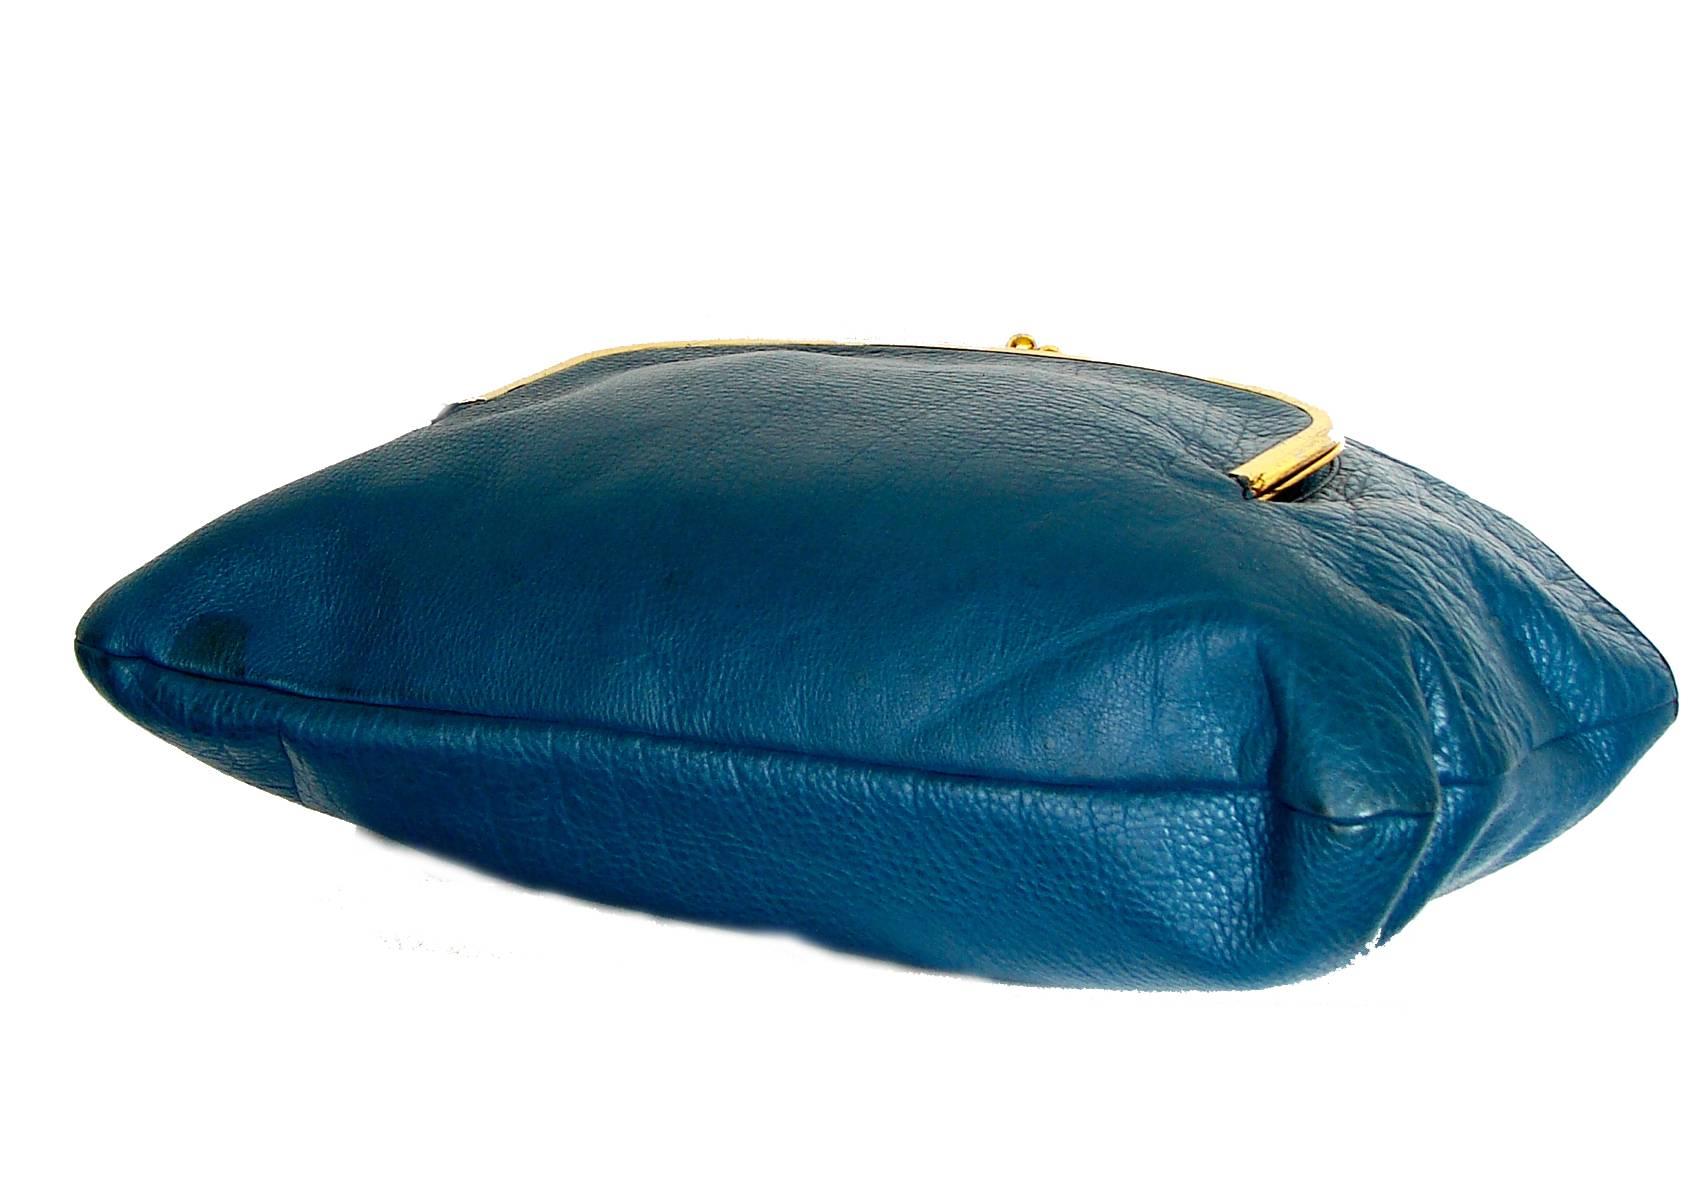 Black Bonnie Cashin Coach Mod Blueberry Leather XL Tote Bag with Kiss Lock 1960s